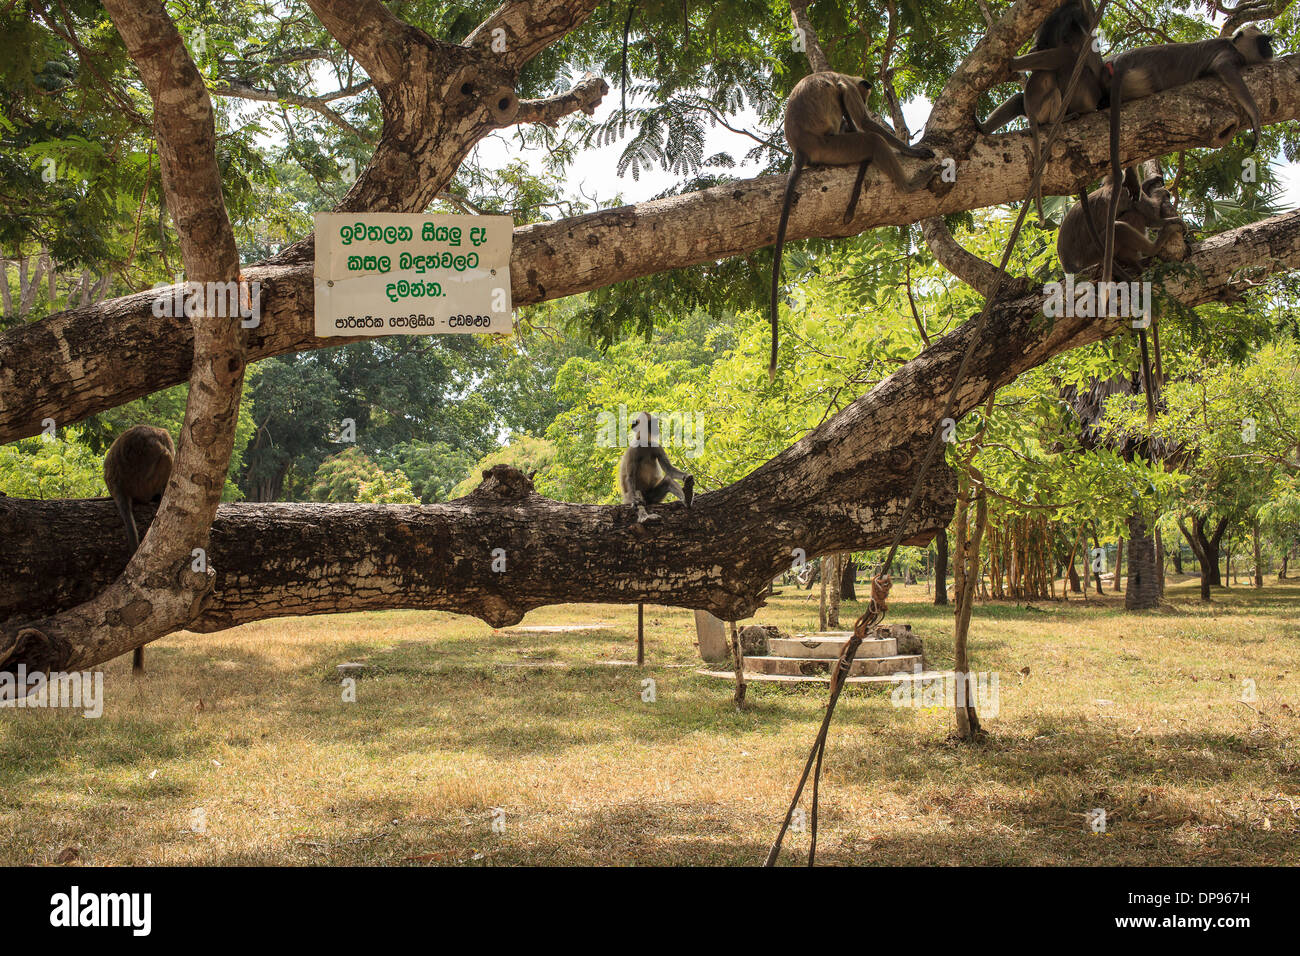 Black faced monkeys in SriLanka sitting on a tree Stock Photo